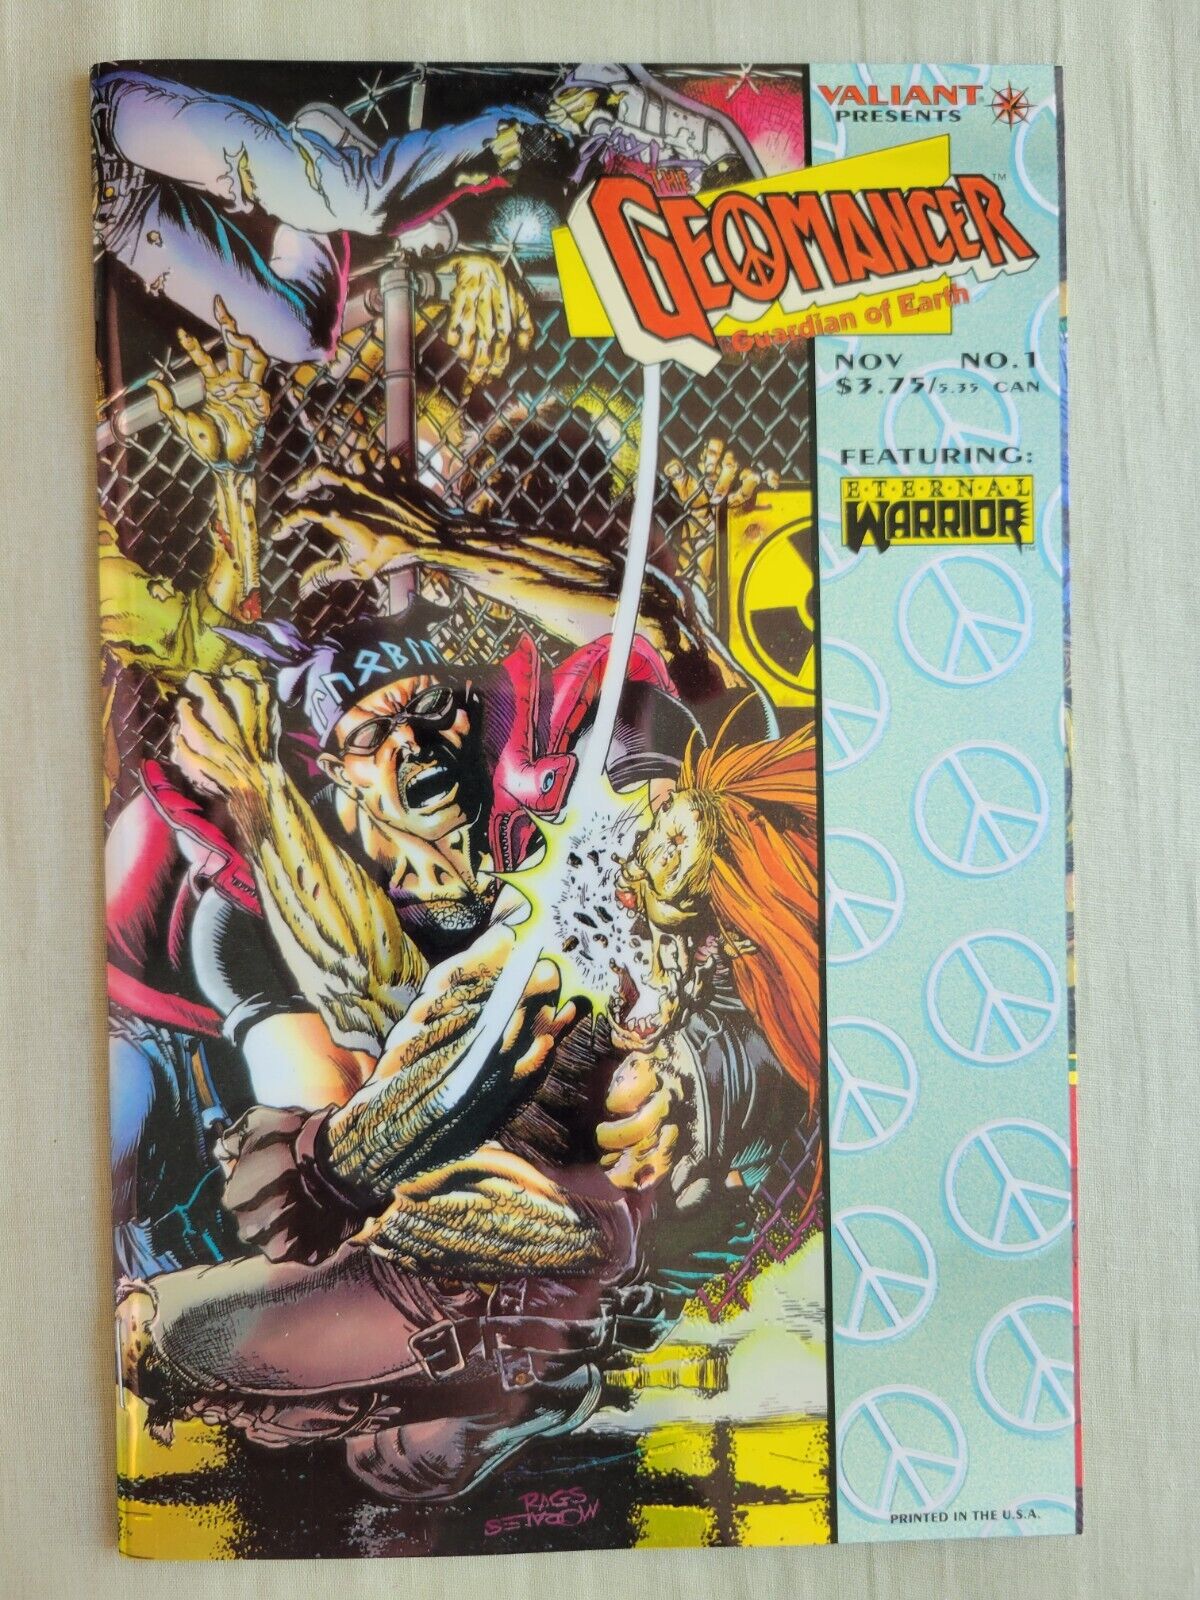 Geomancer #1 (Chromium Wrap Cover)